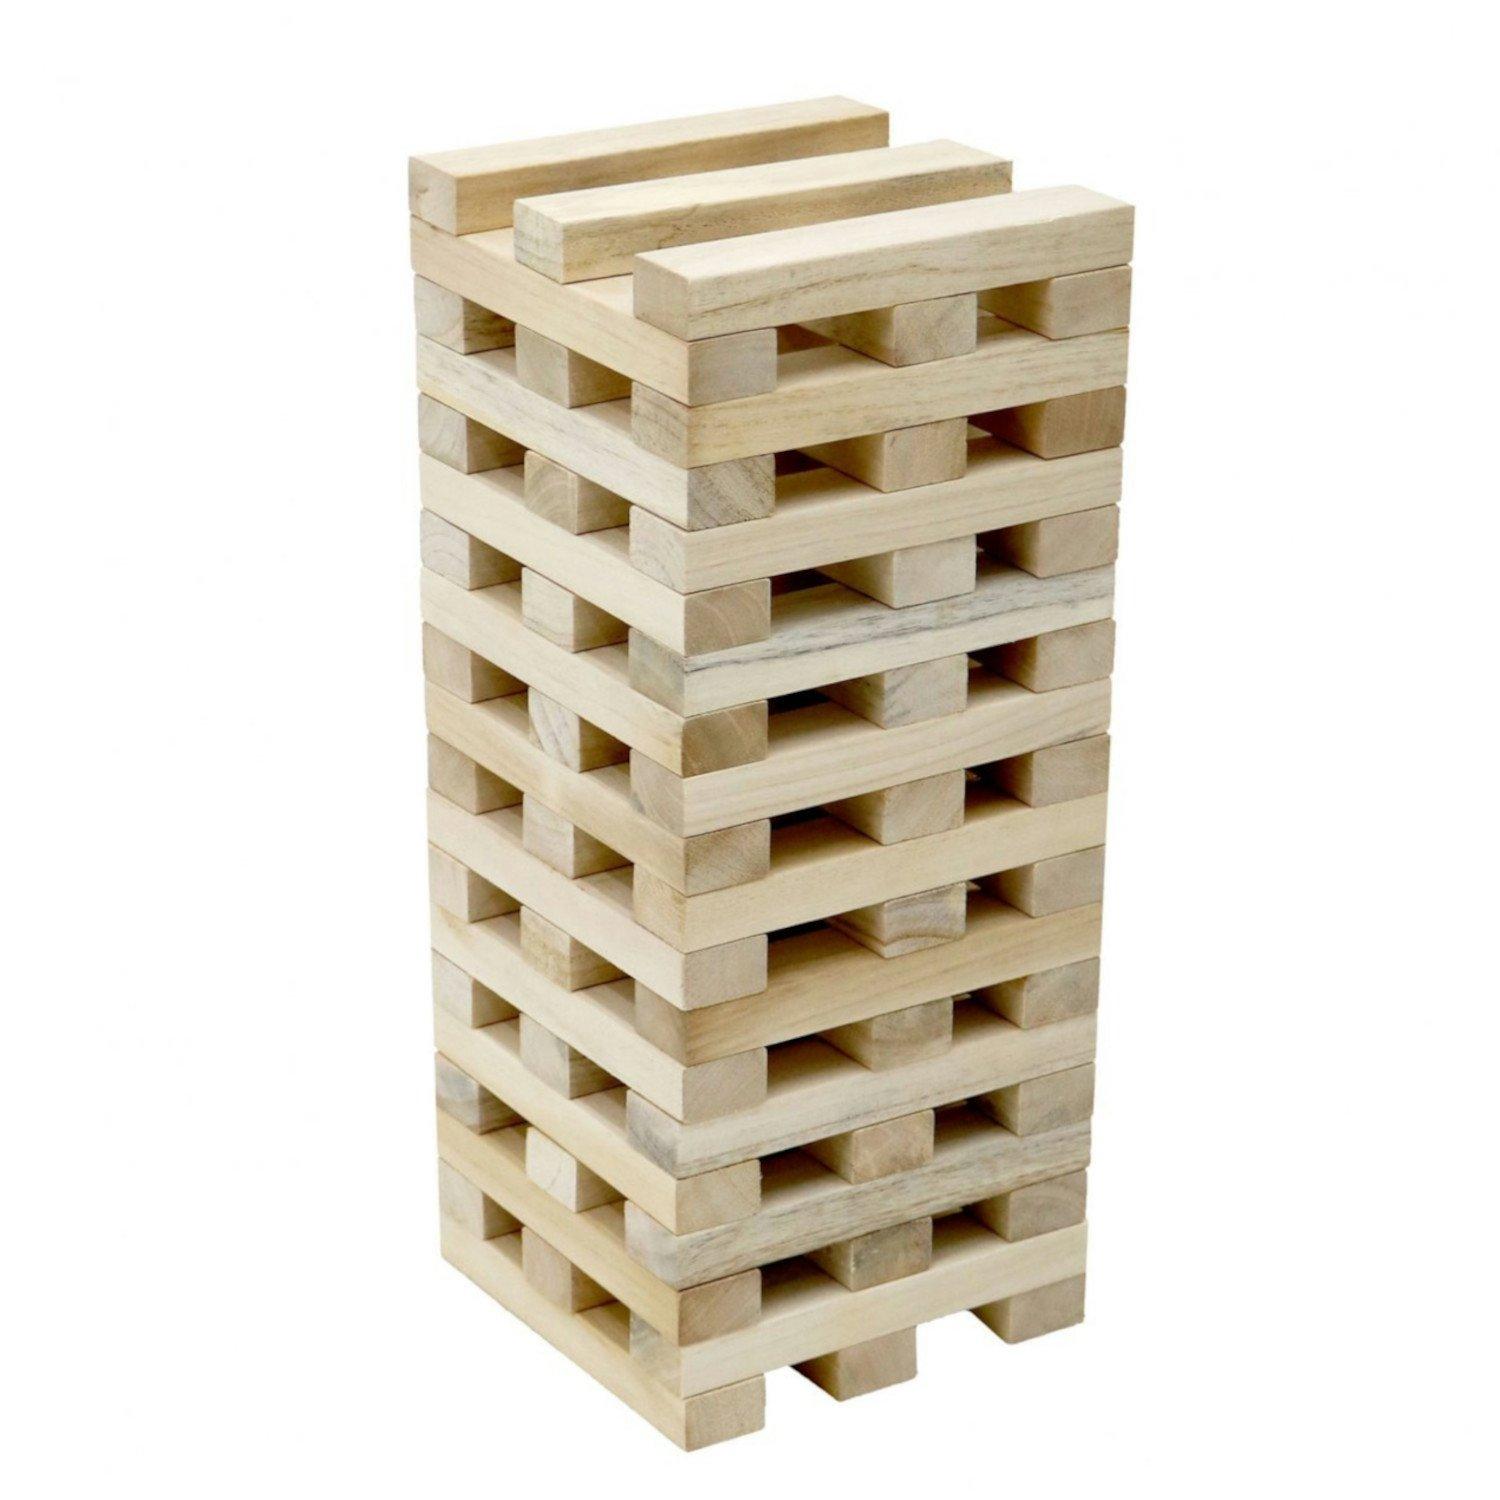 Giant Wooden Tumbling Tower Block Game